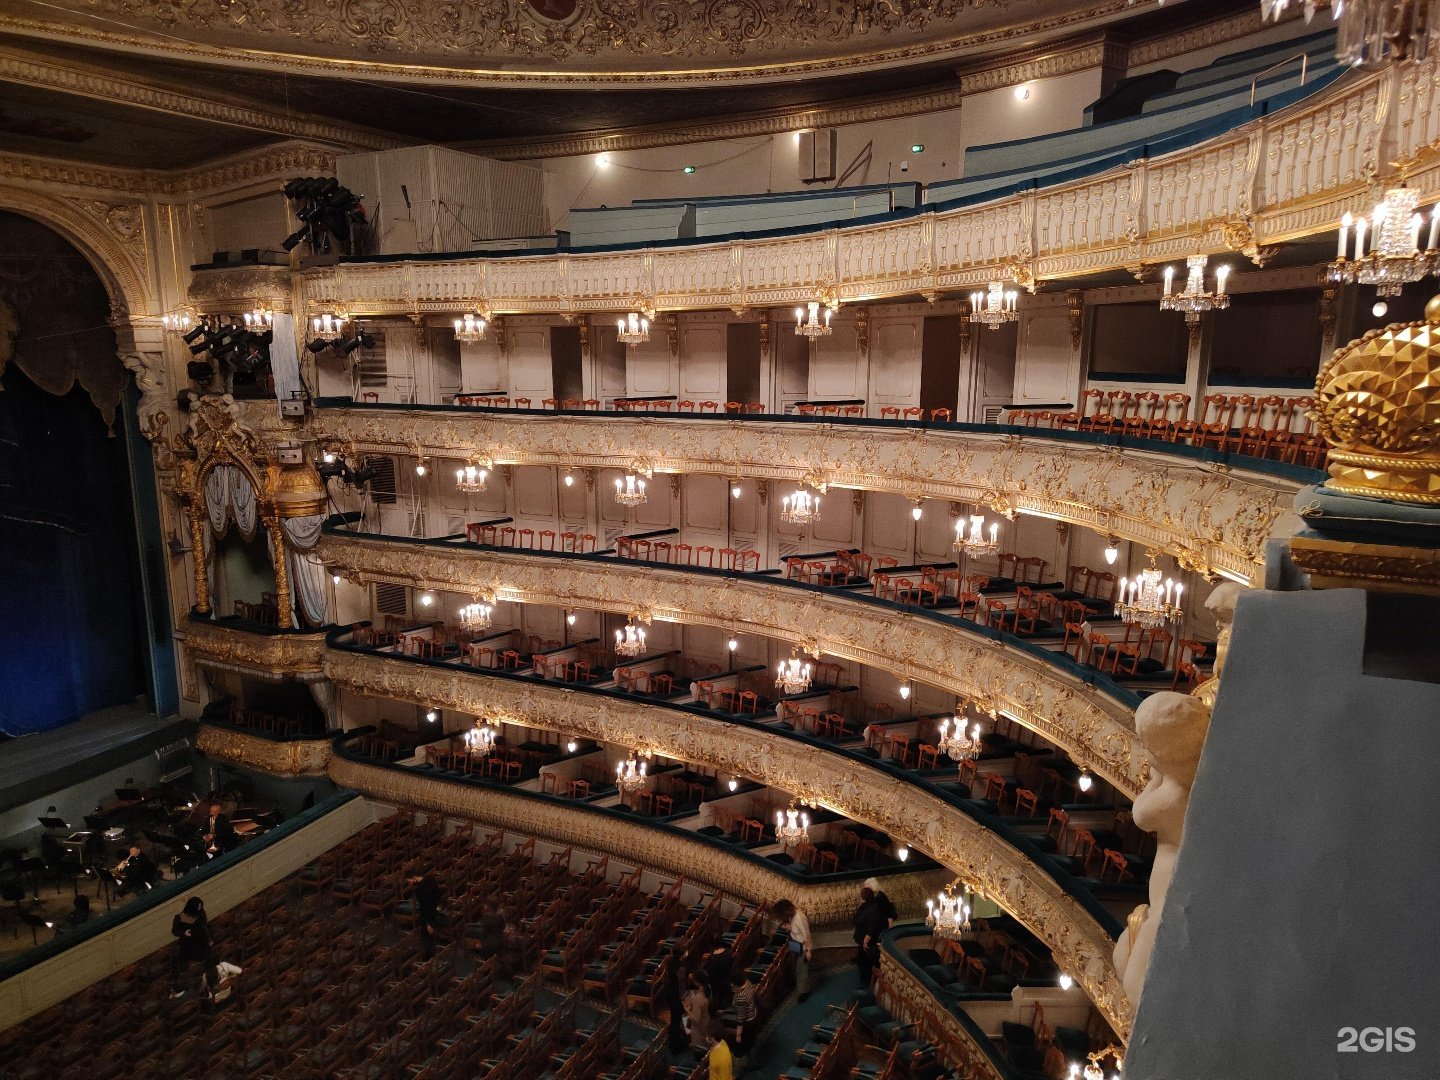 Мариинский театр фото внутри театра